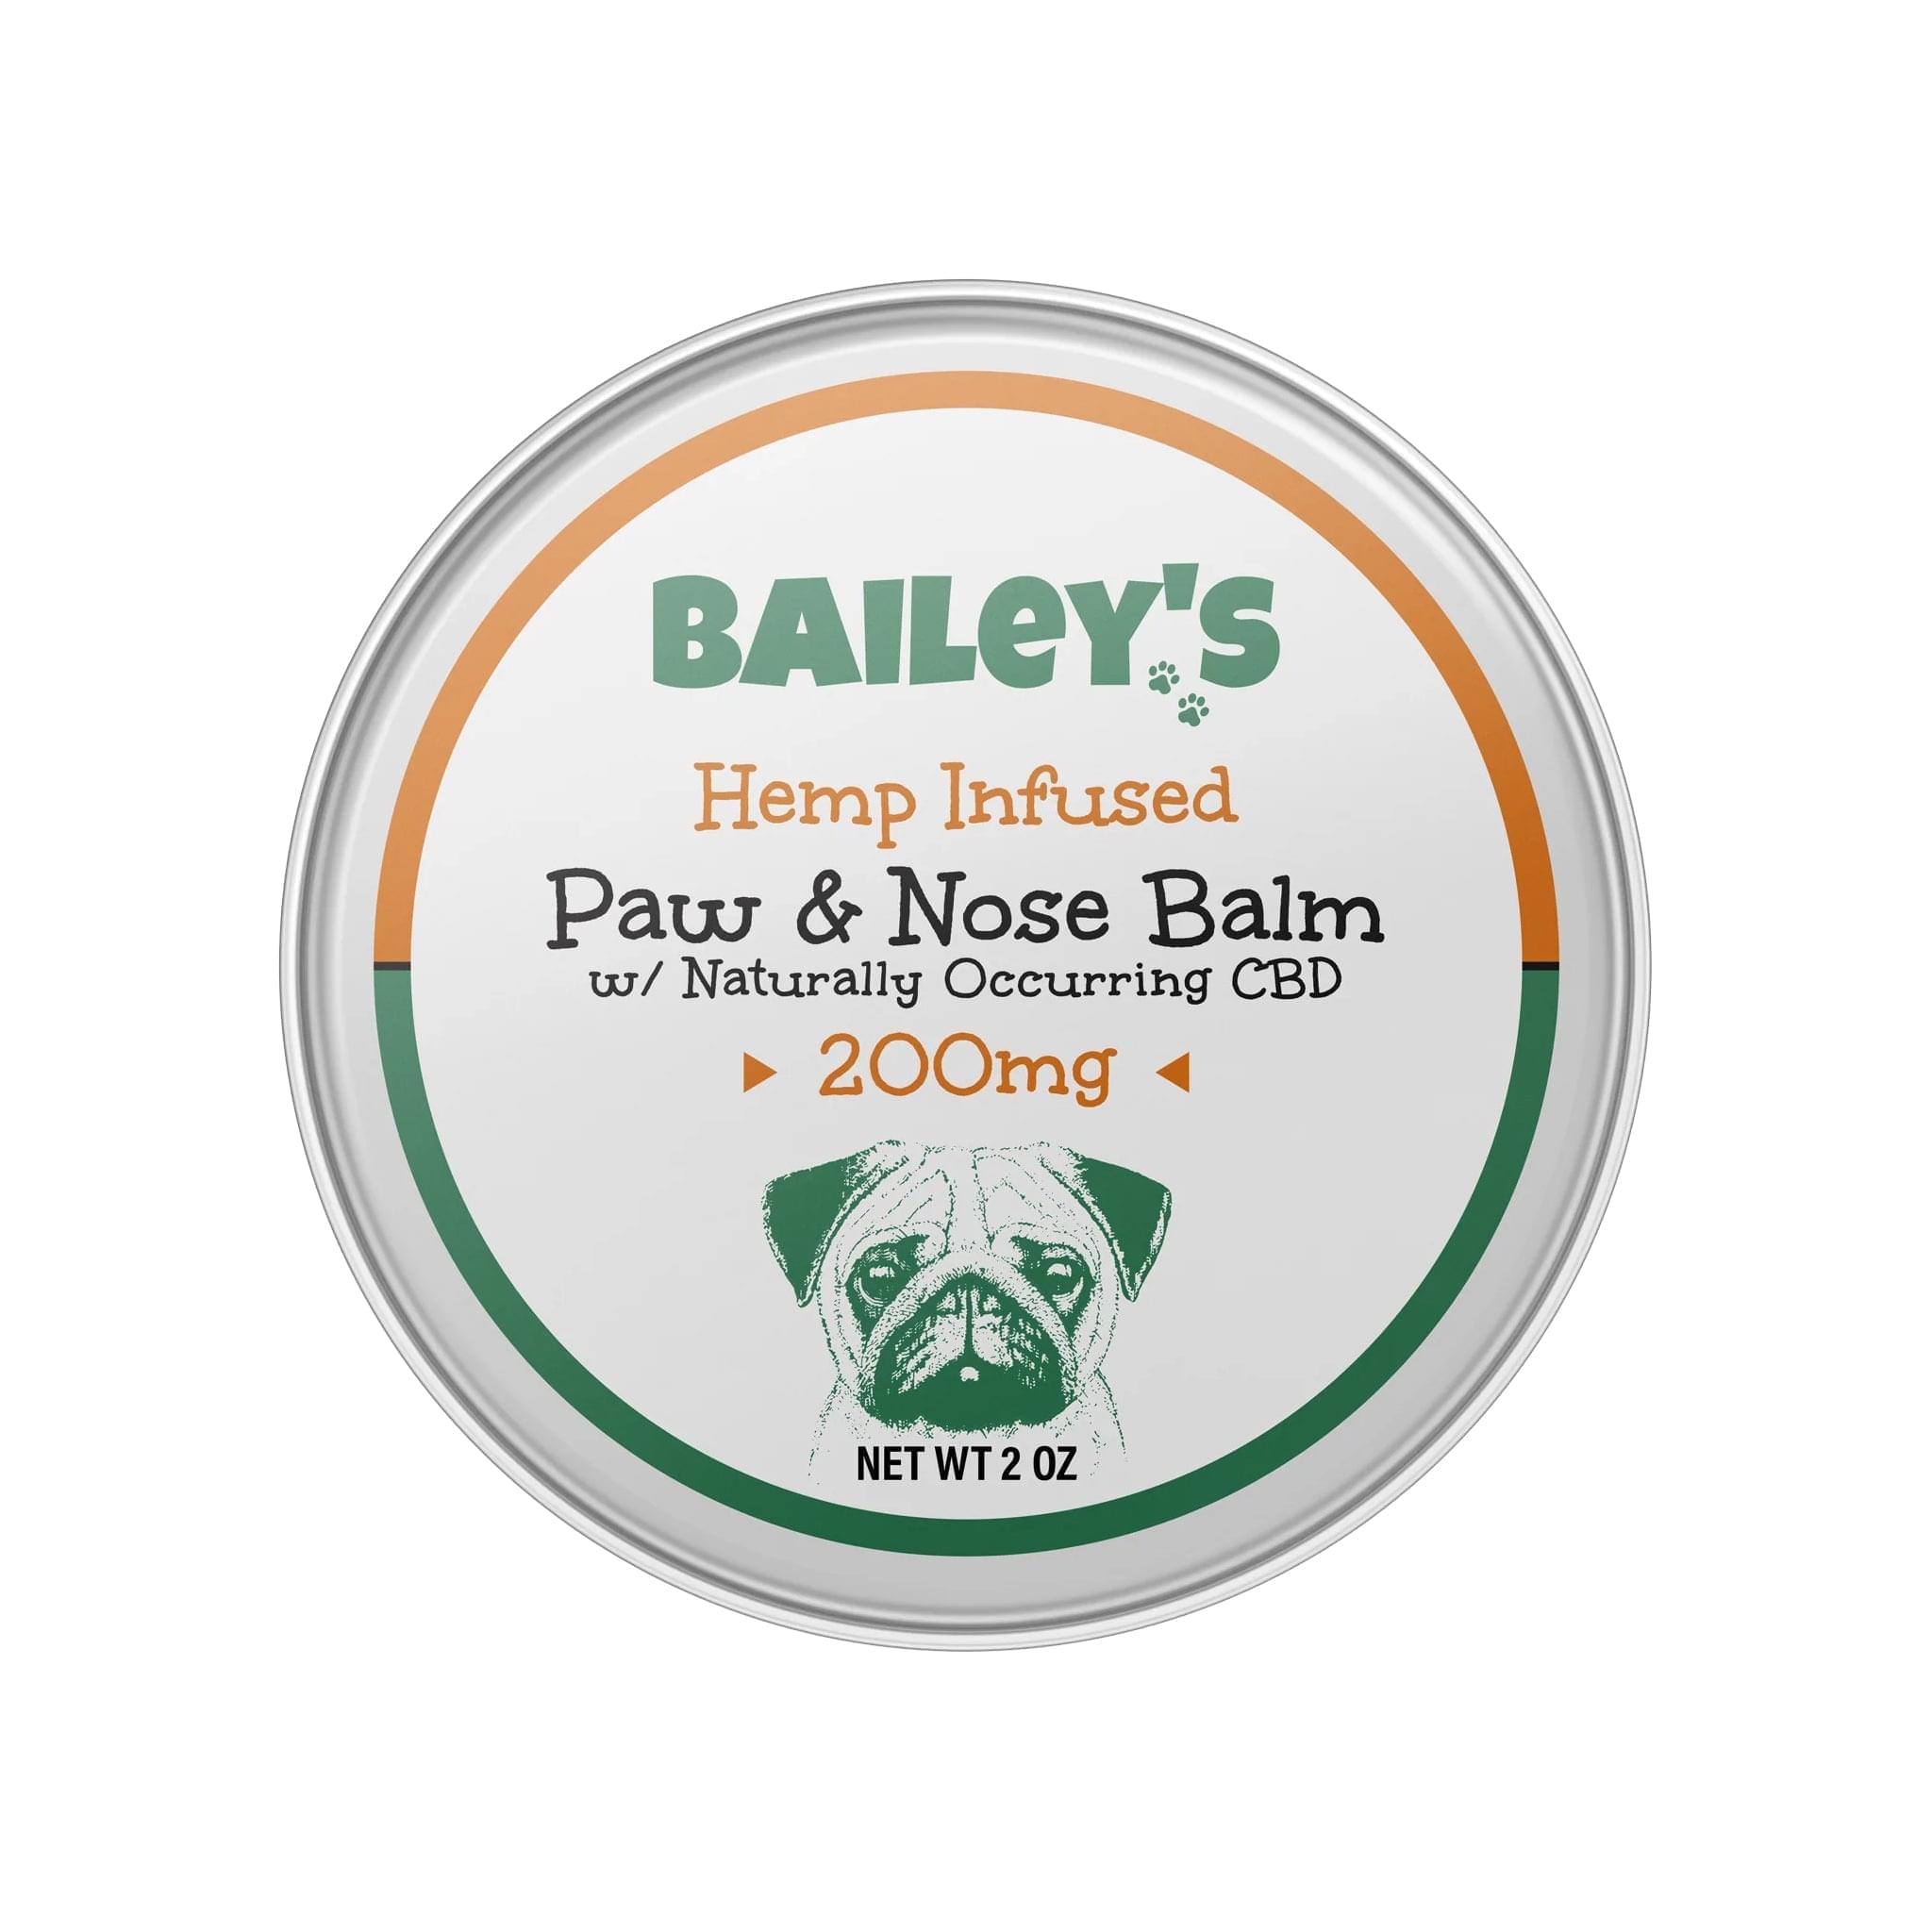 Bailey's CBD Paw and Nose Balm